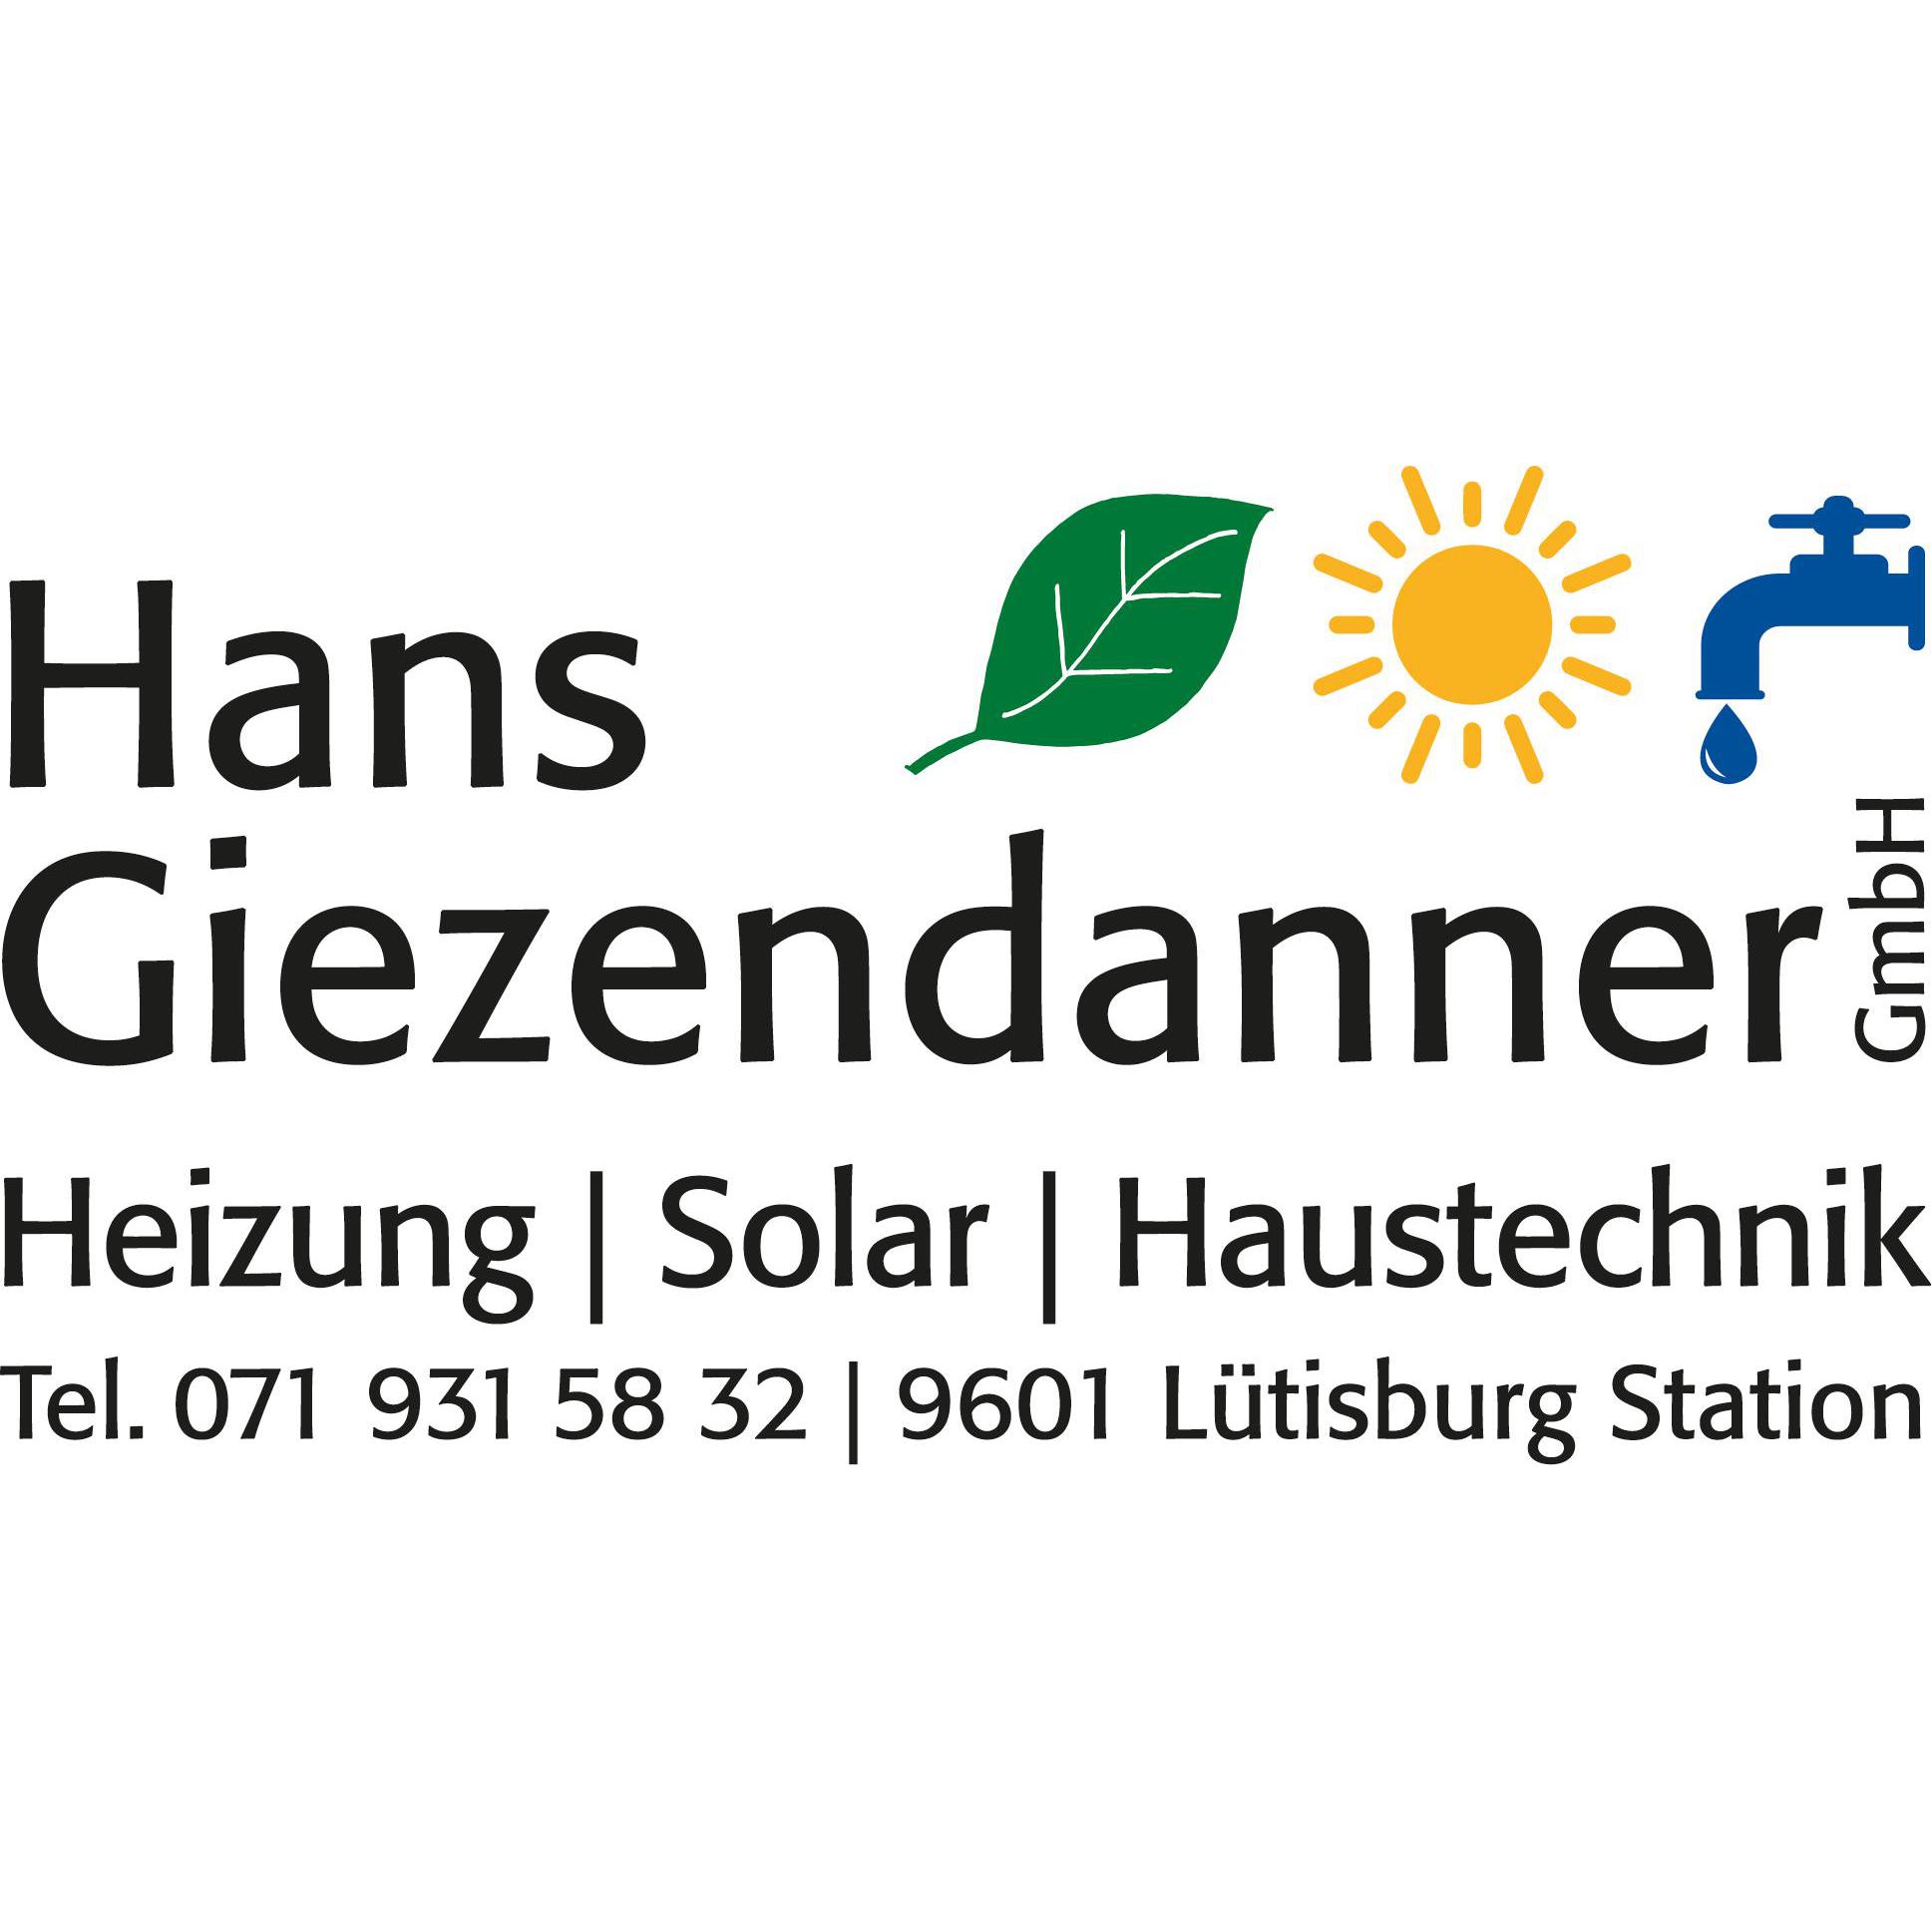 Hans Giezendanner GmbH Logo